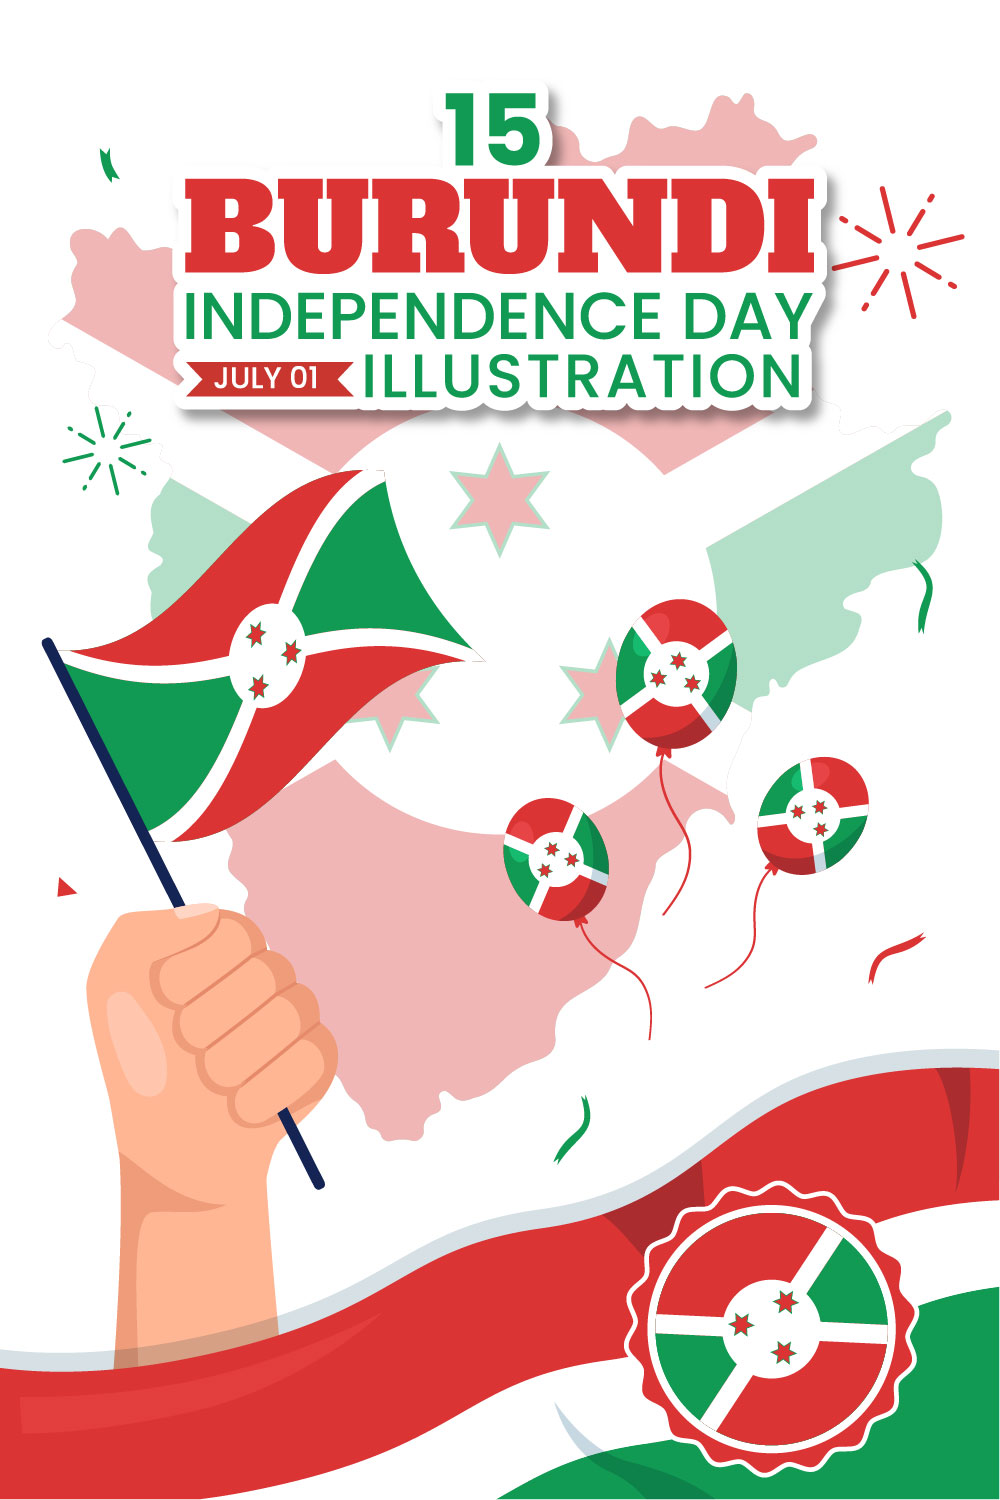 15 Burundi Independence Day Illustration pinterest preview image.